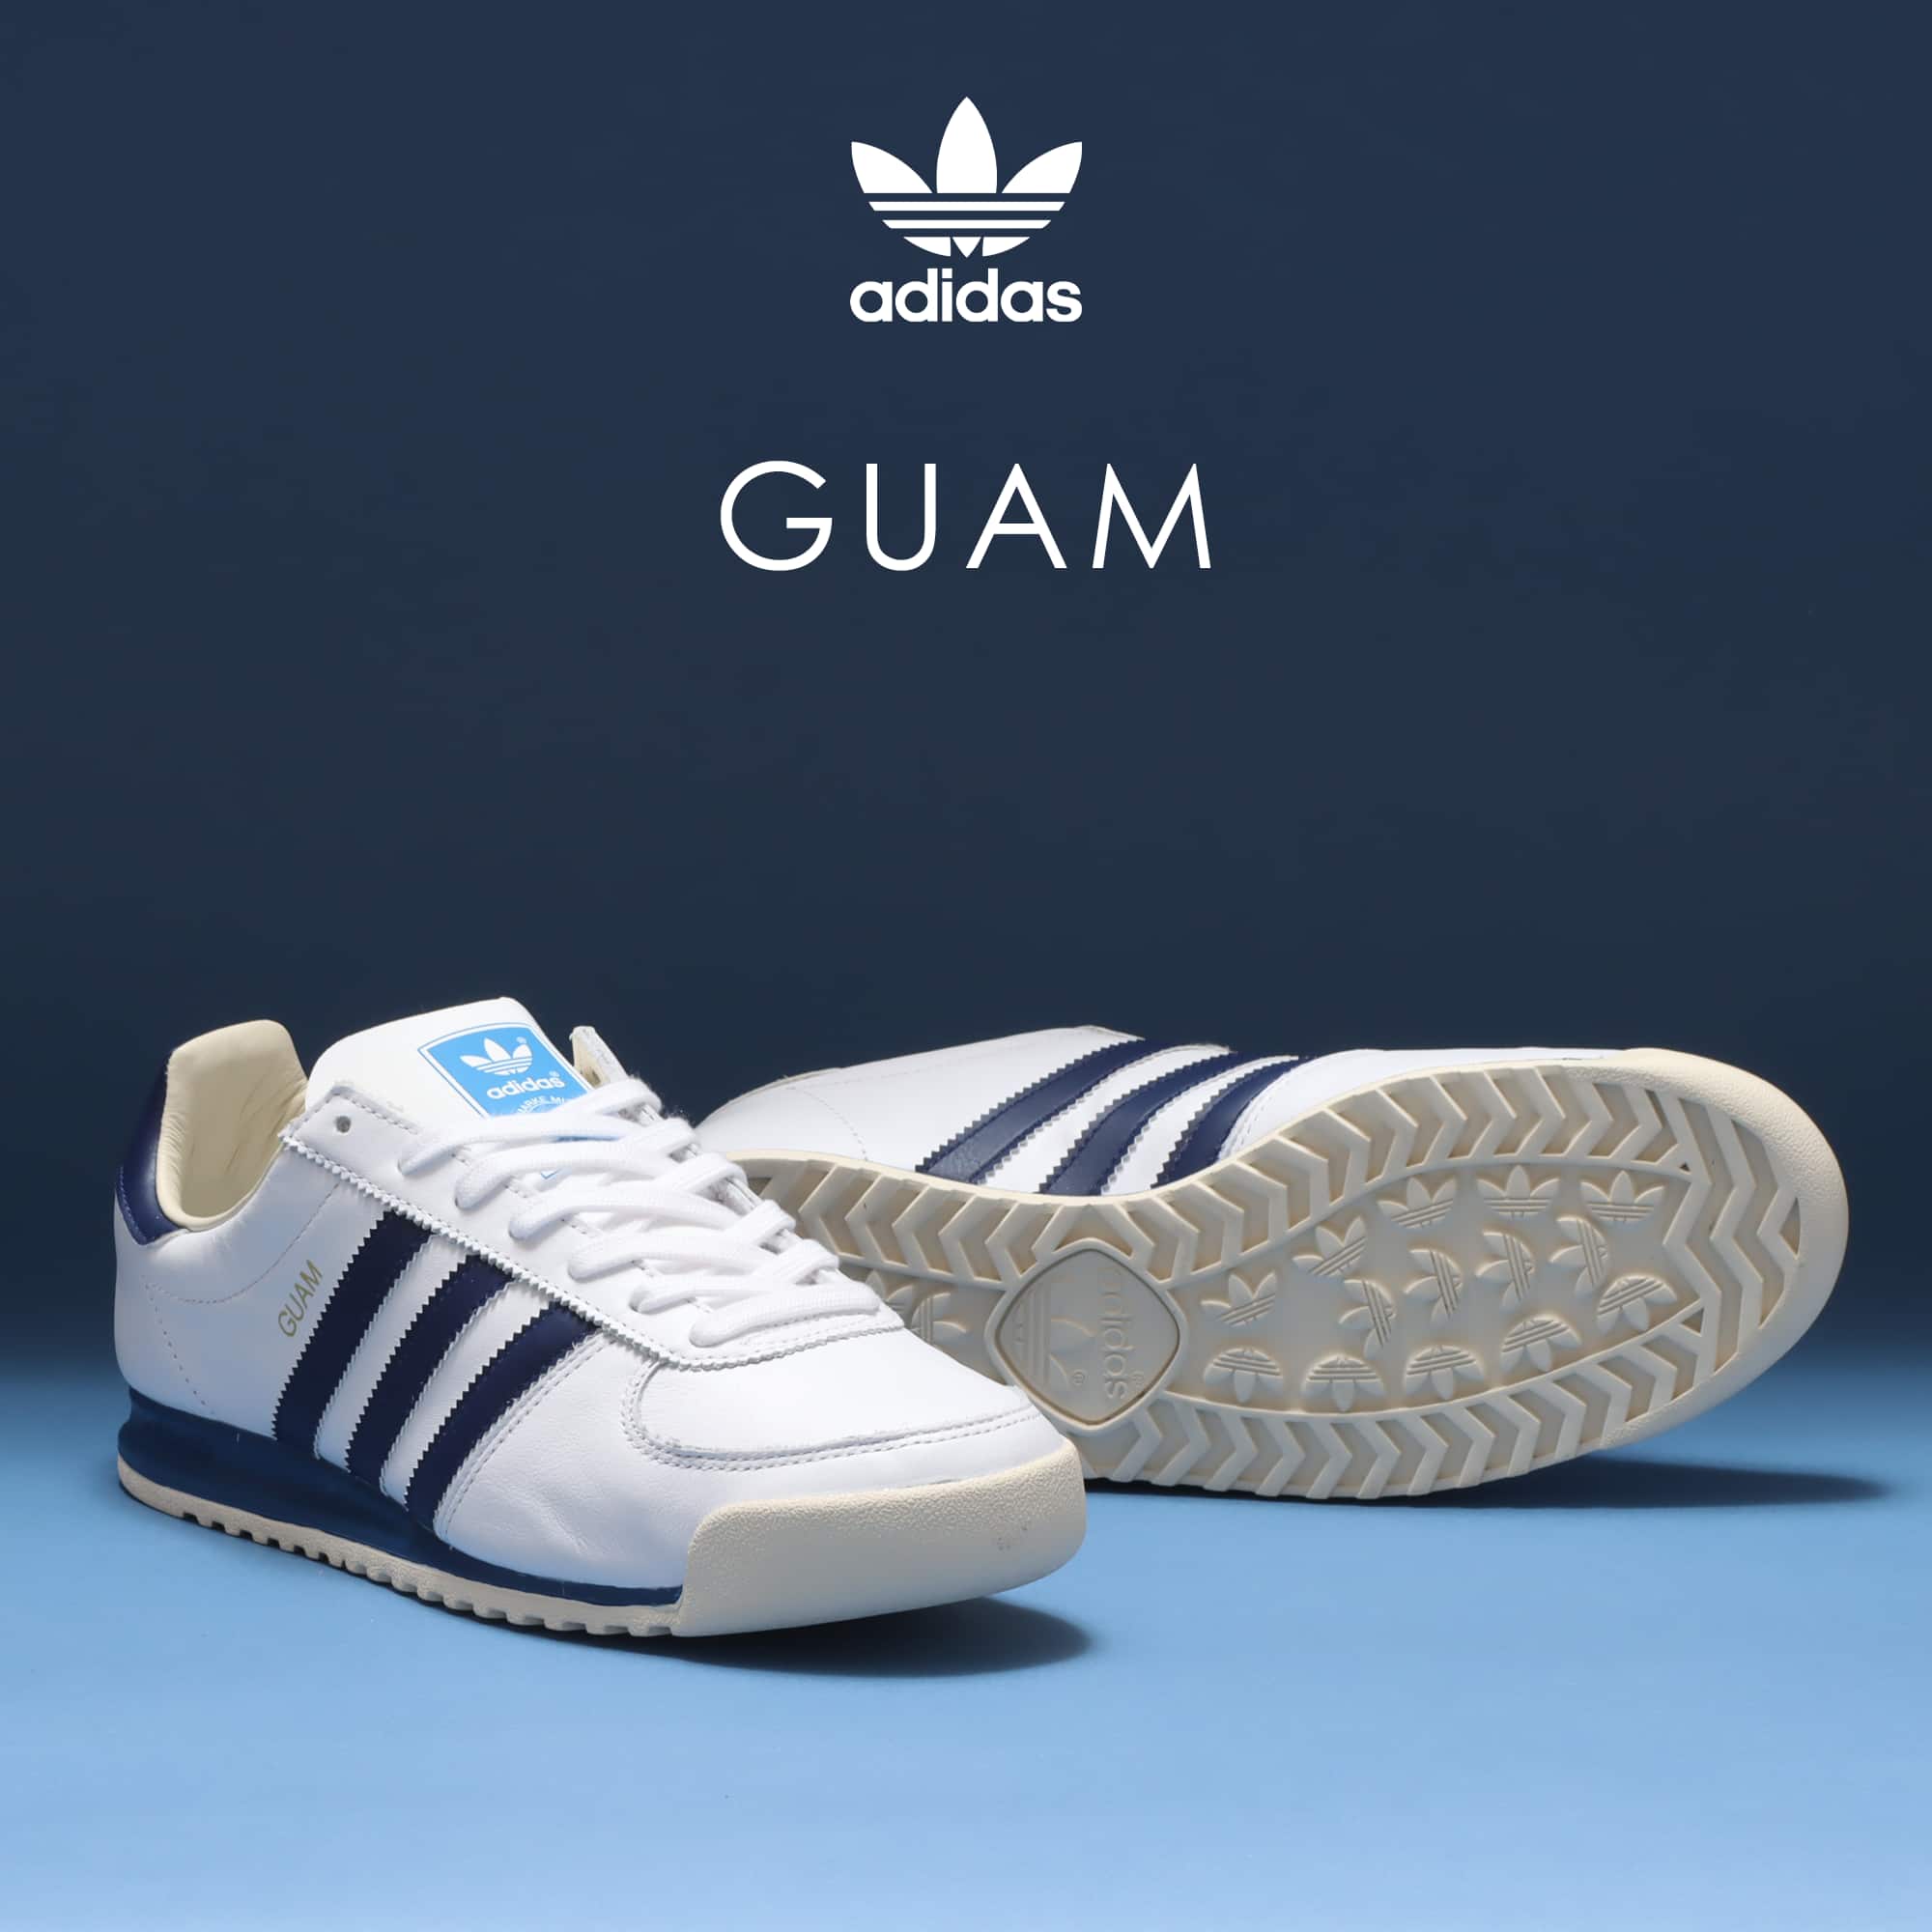 Adidas original Guam sneaker